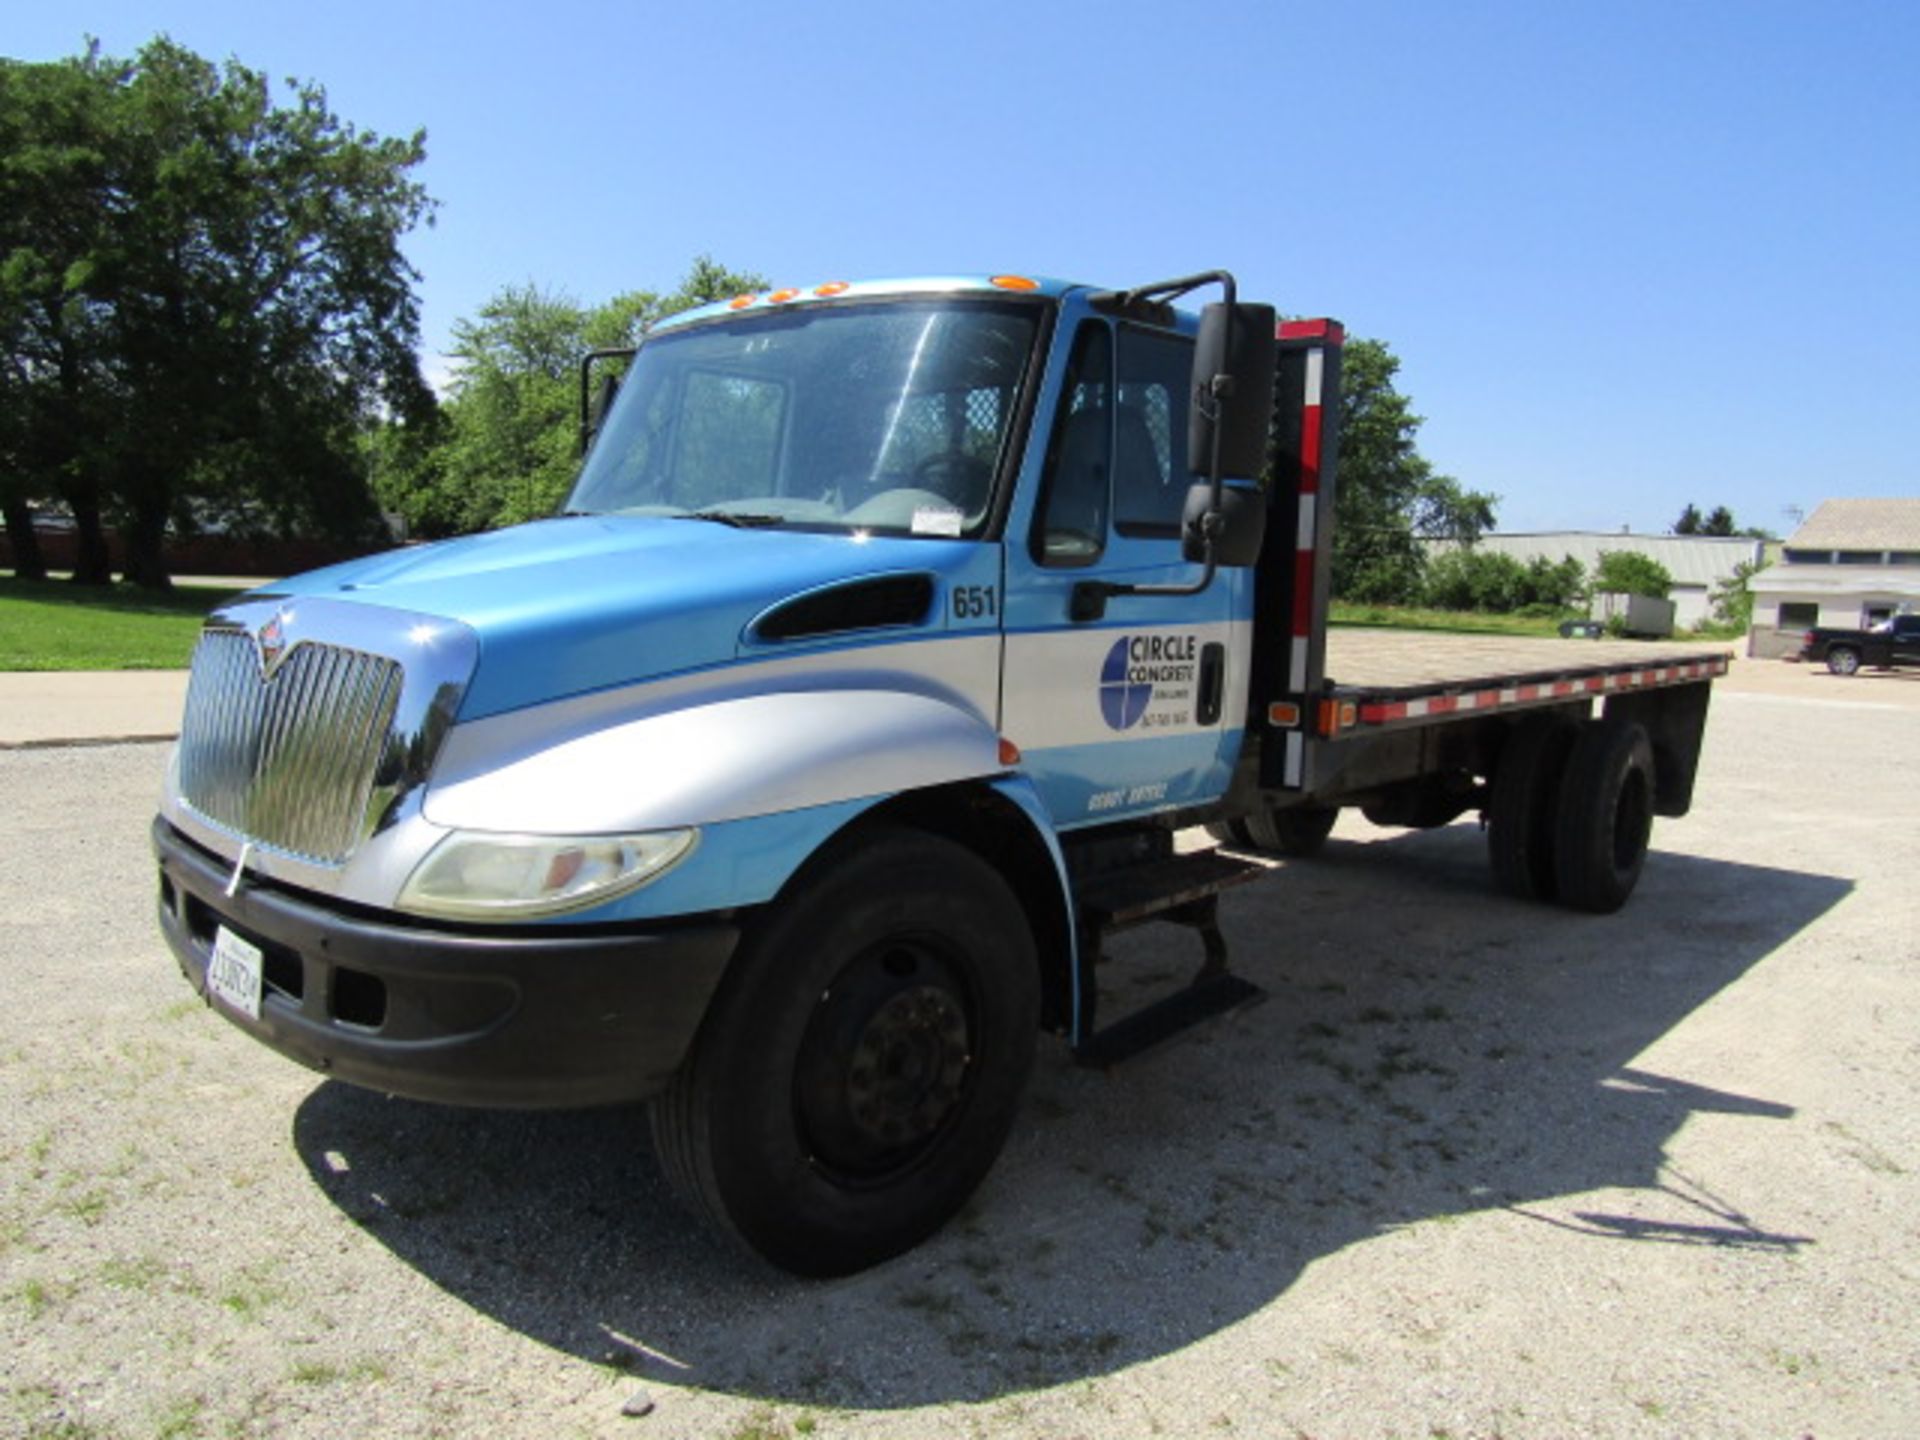 2005 International Model #4300 SBA Flat Bed Truck, 4 x 2 Dually, VIN #1HTMMAAM65H167651, 210658 - Image 2 of 35